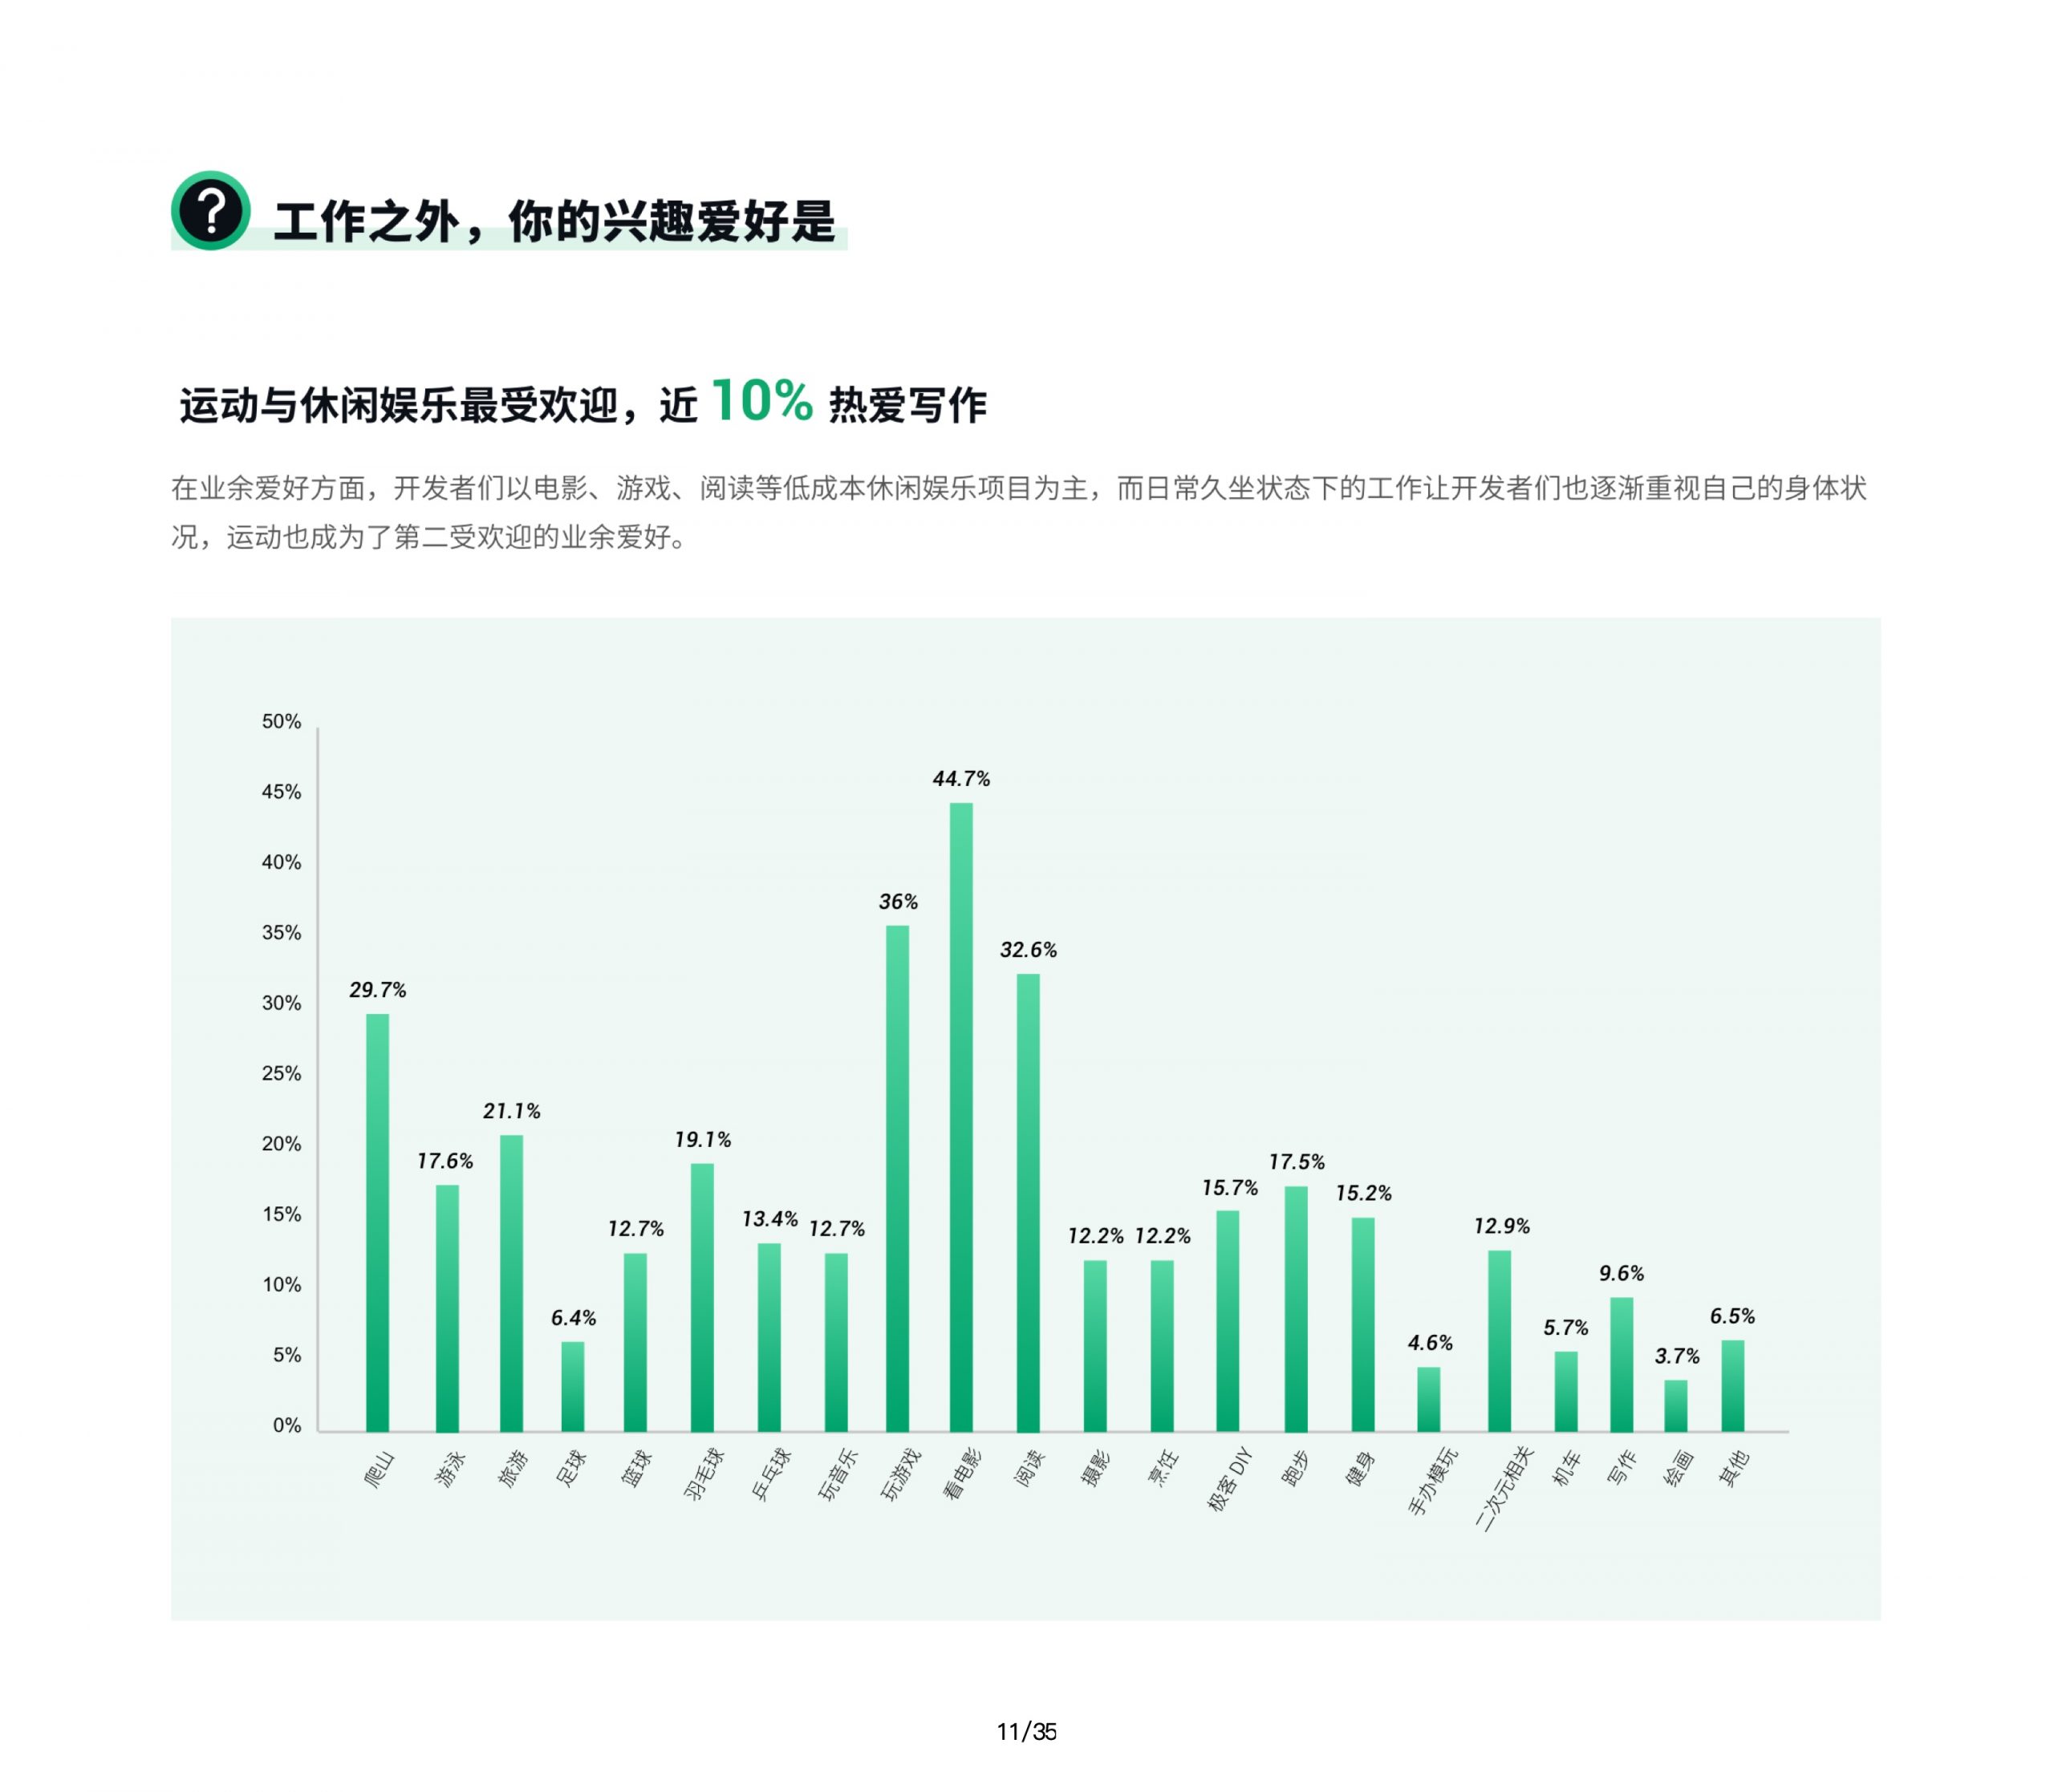 OSCHINA&Gitee：2021年中国开源开发者报告